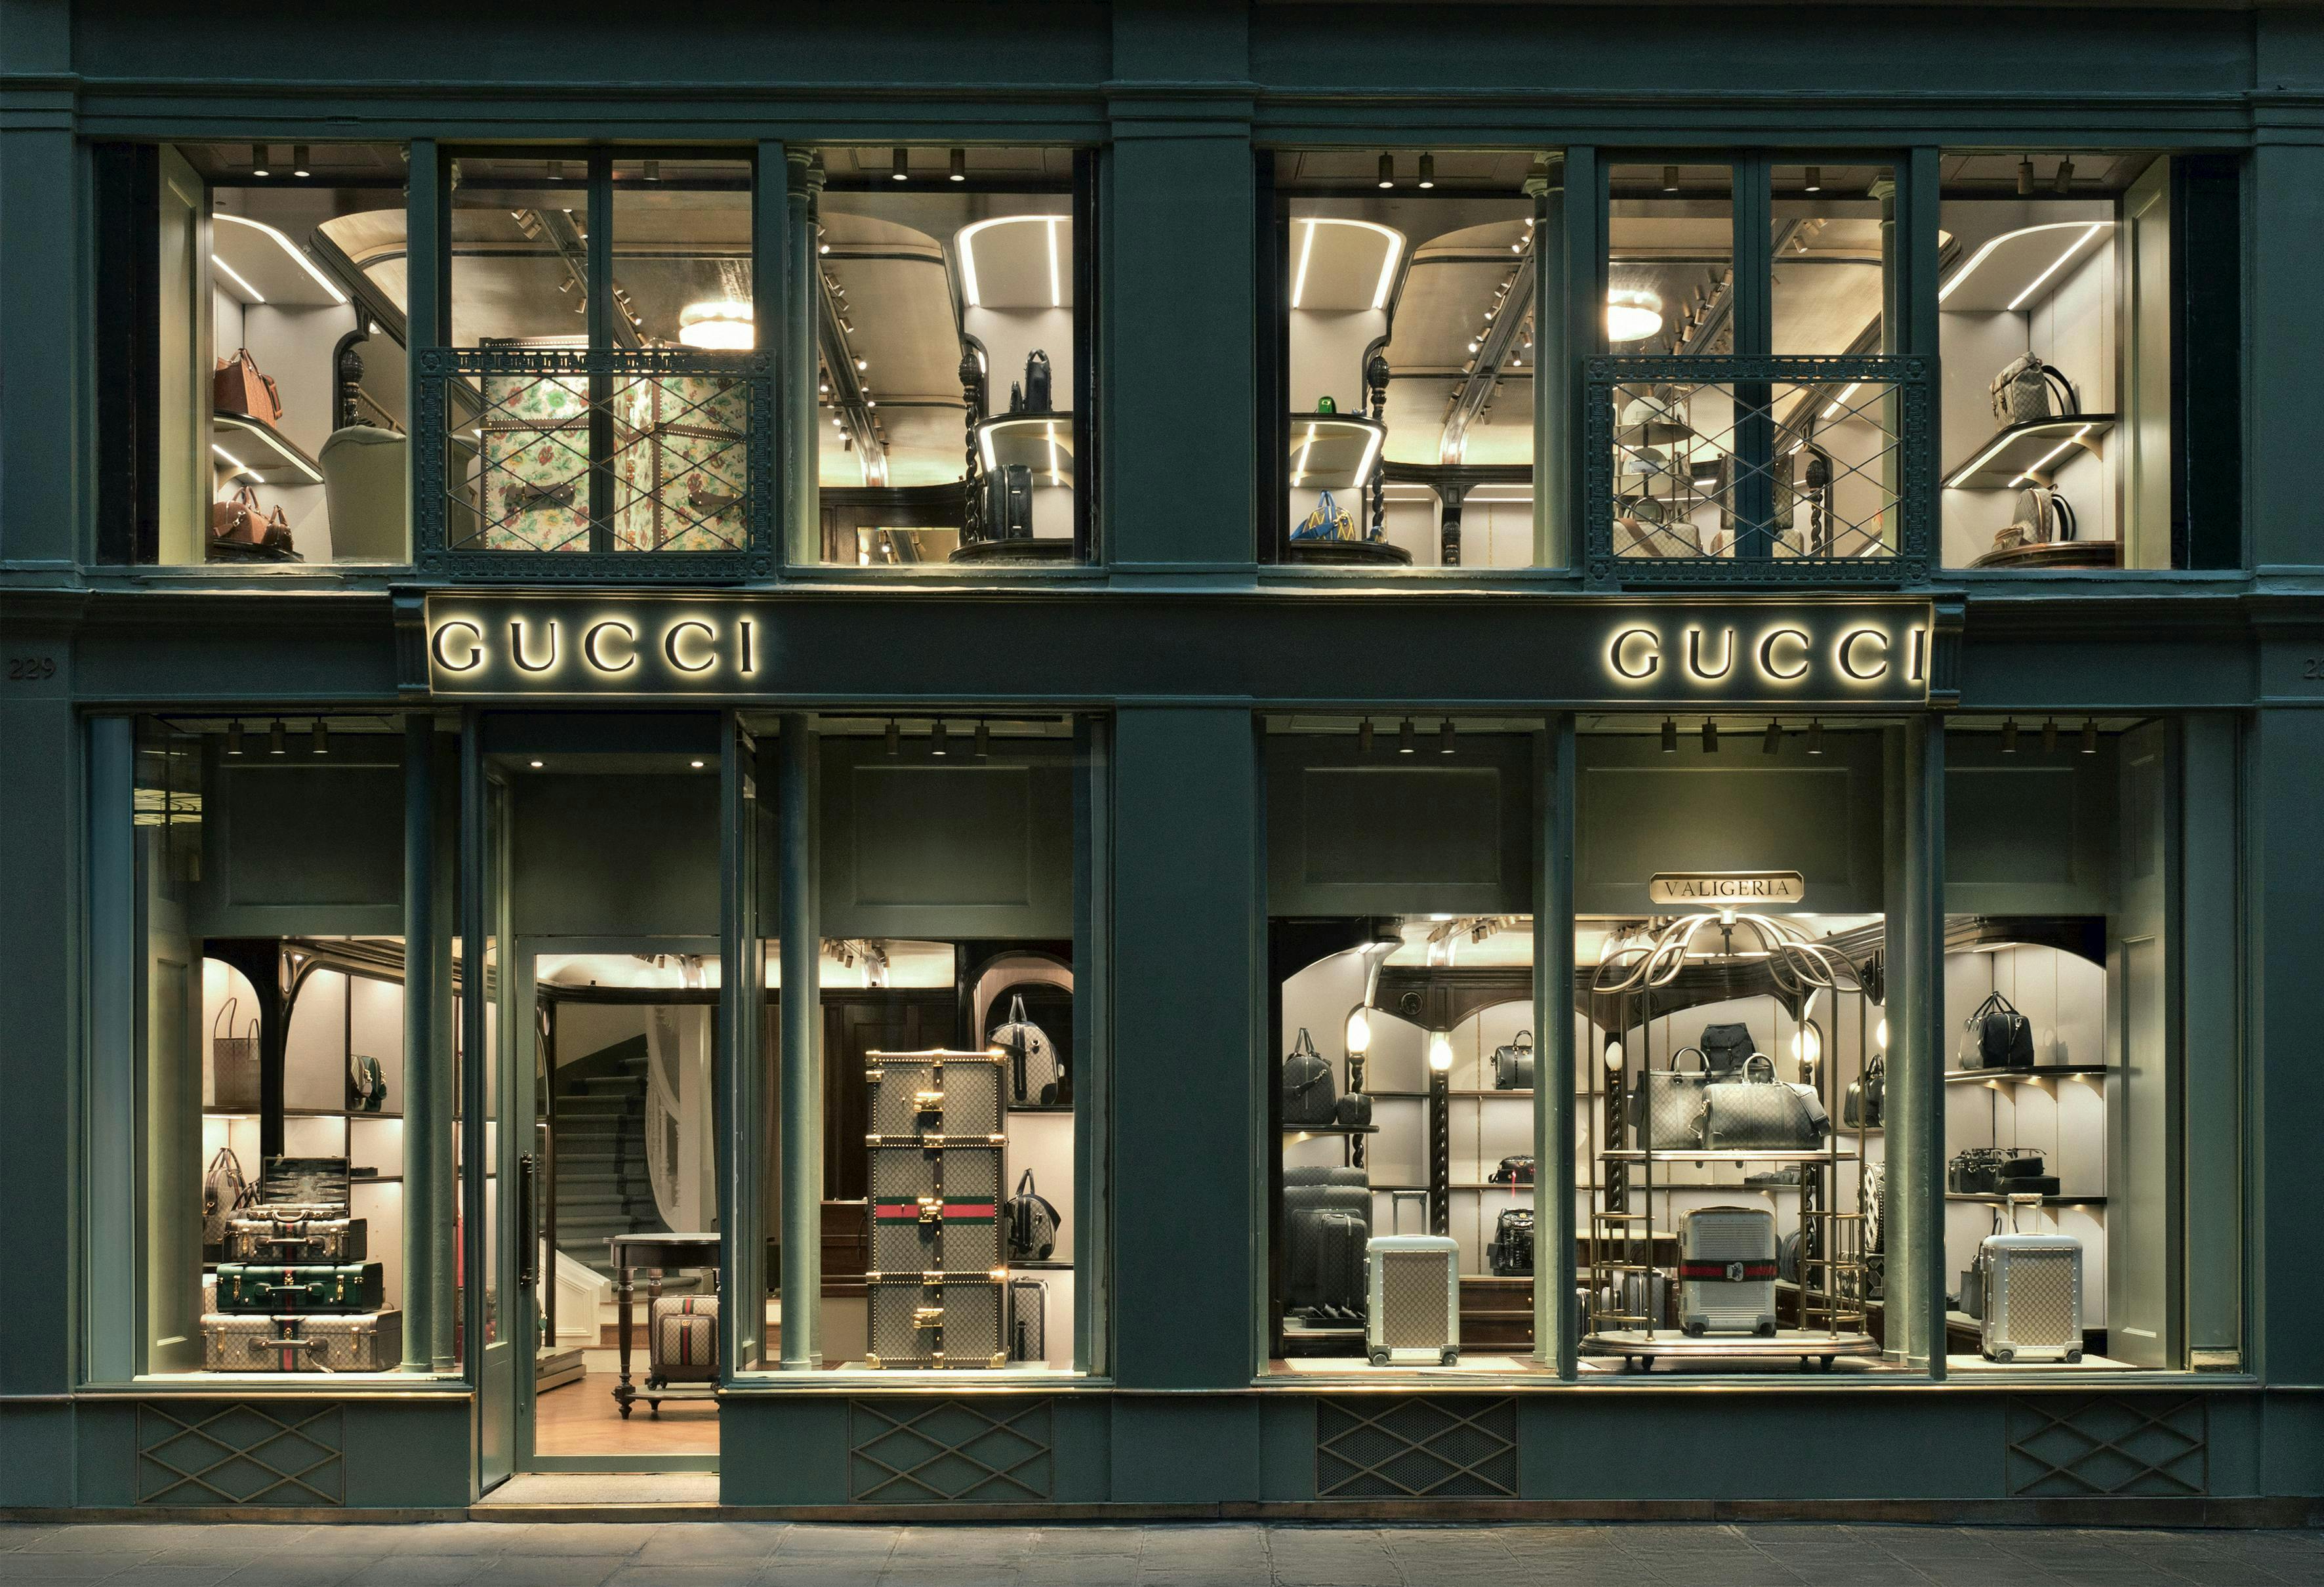 paris 8 handbag bag accessories shop building architecture window display boutique